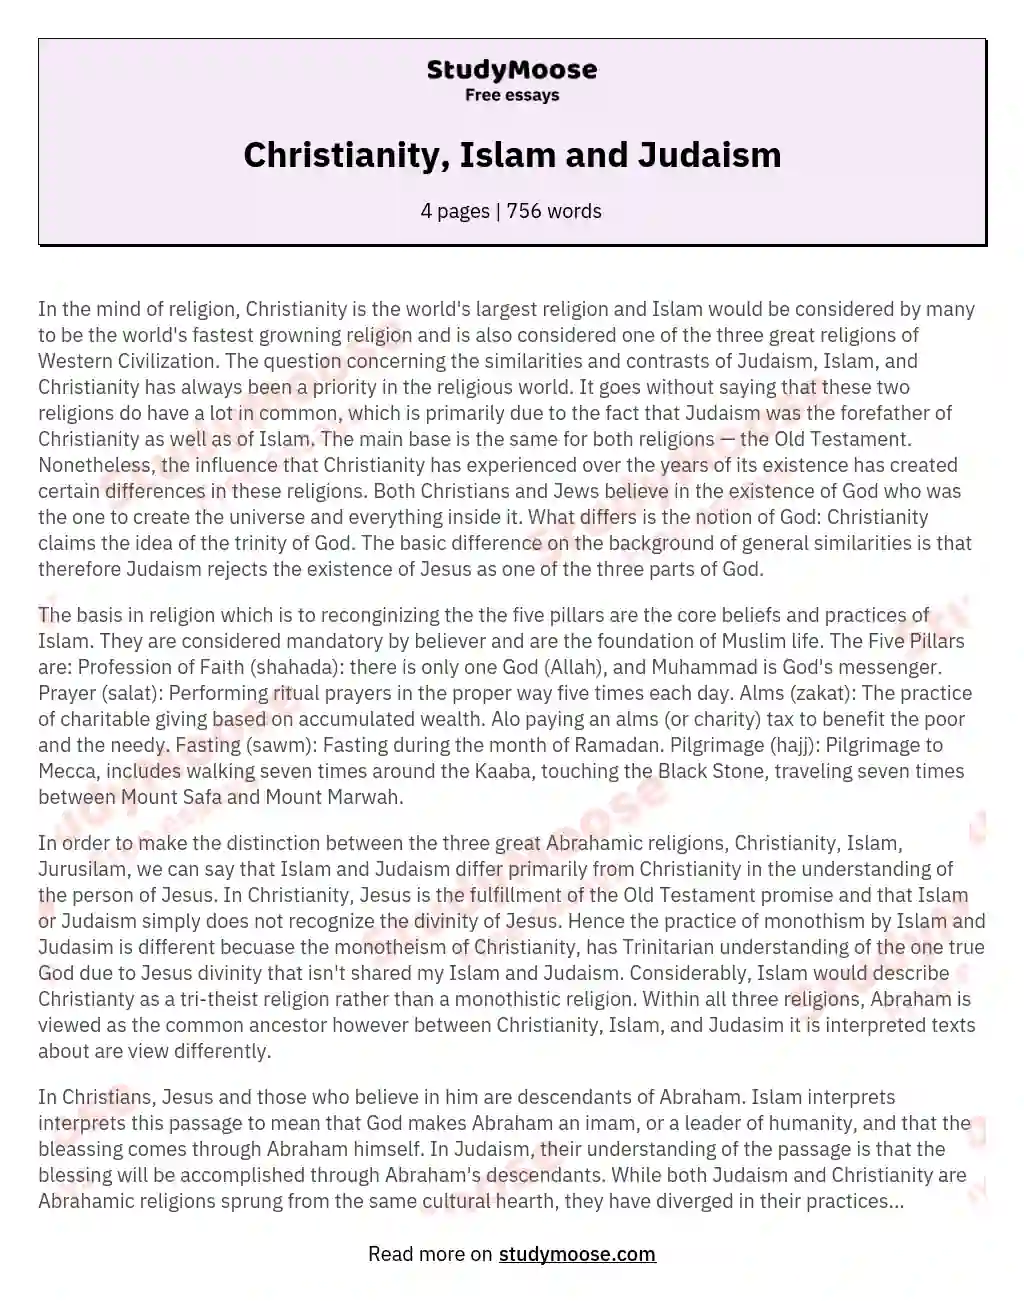 Christianity, Islam and Judaism